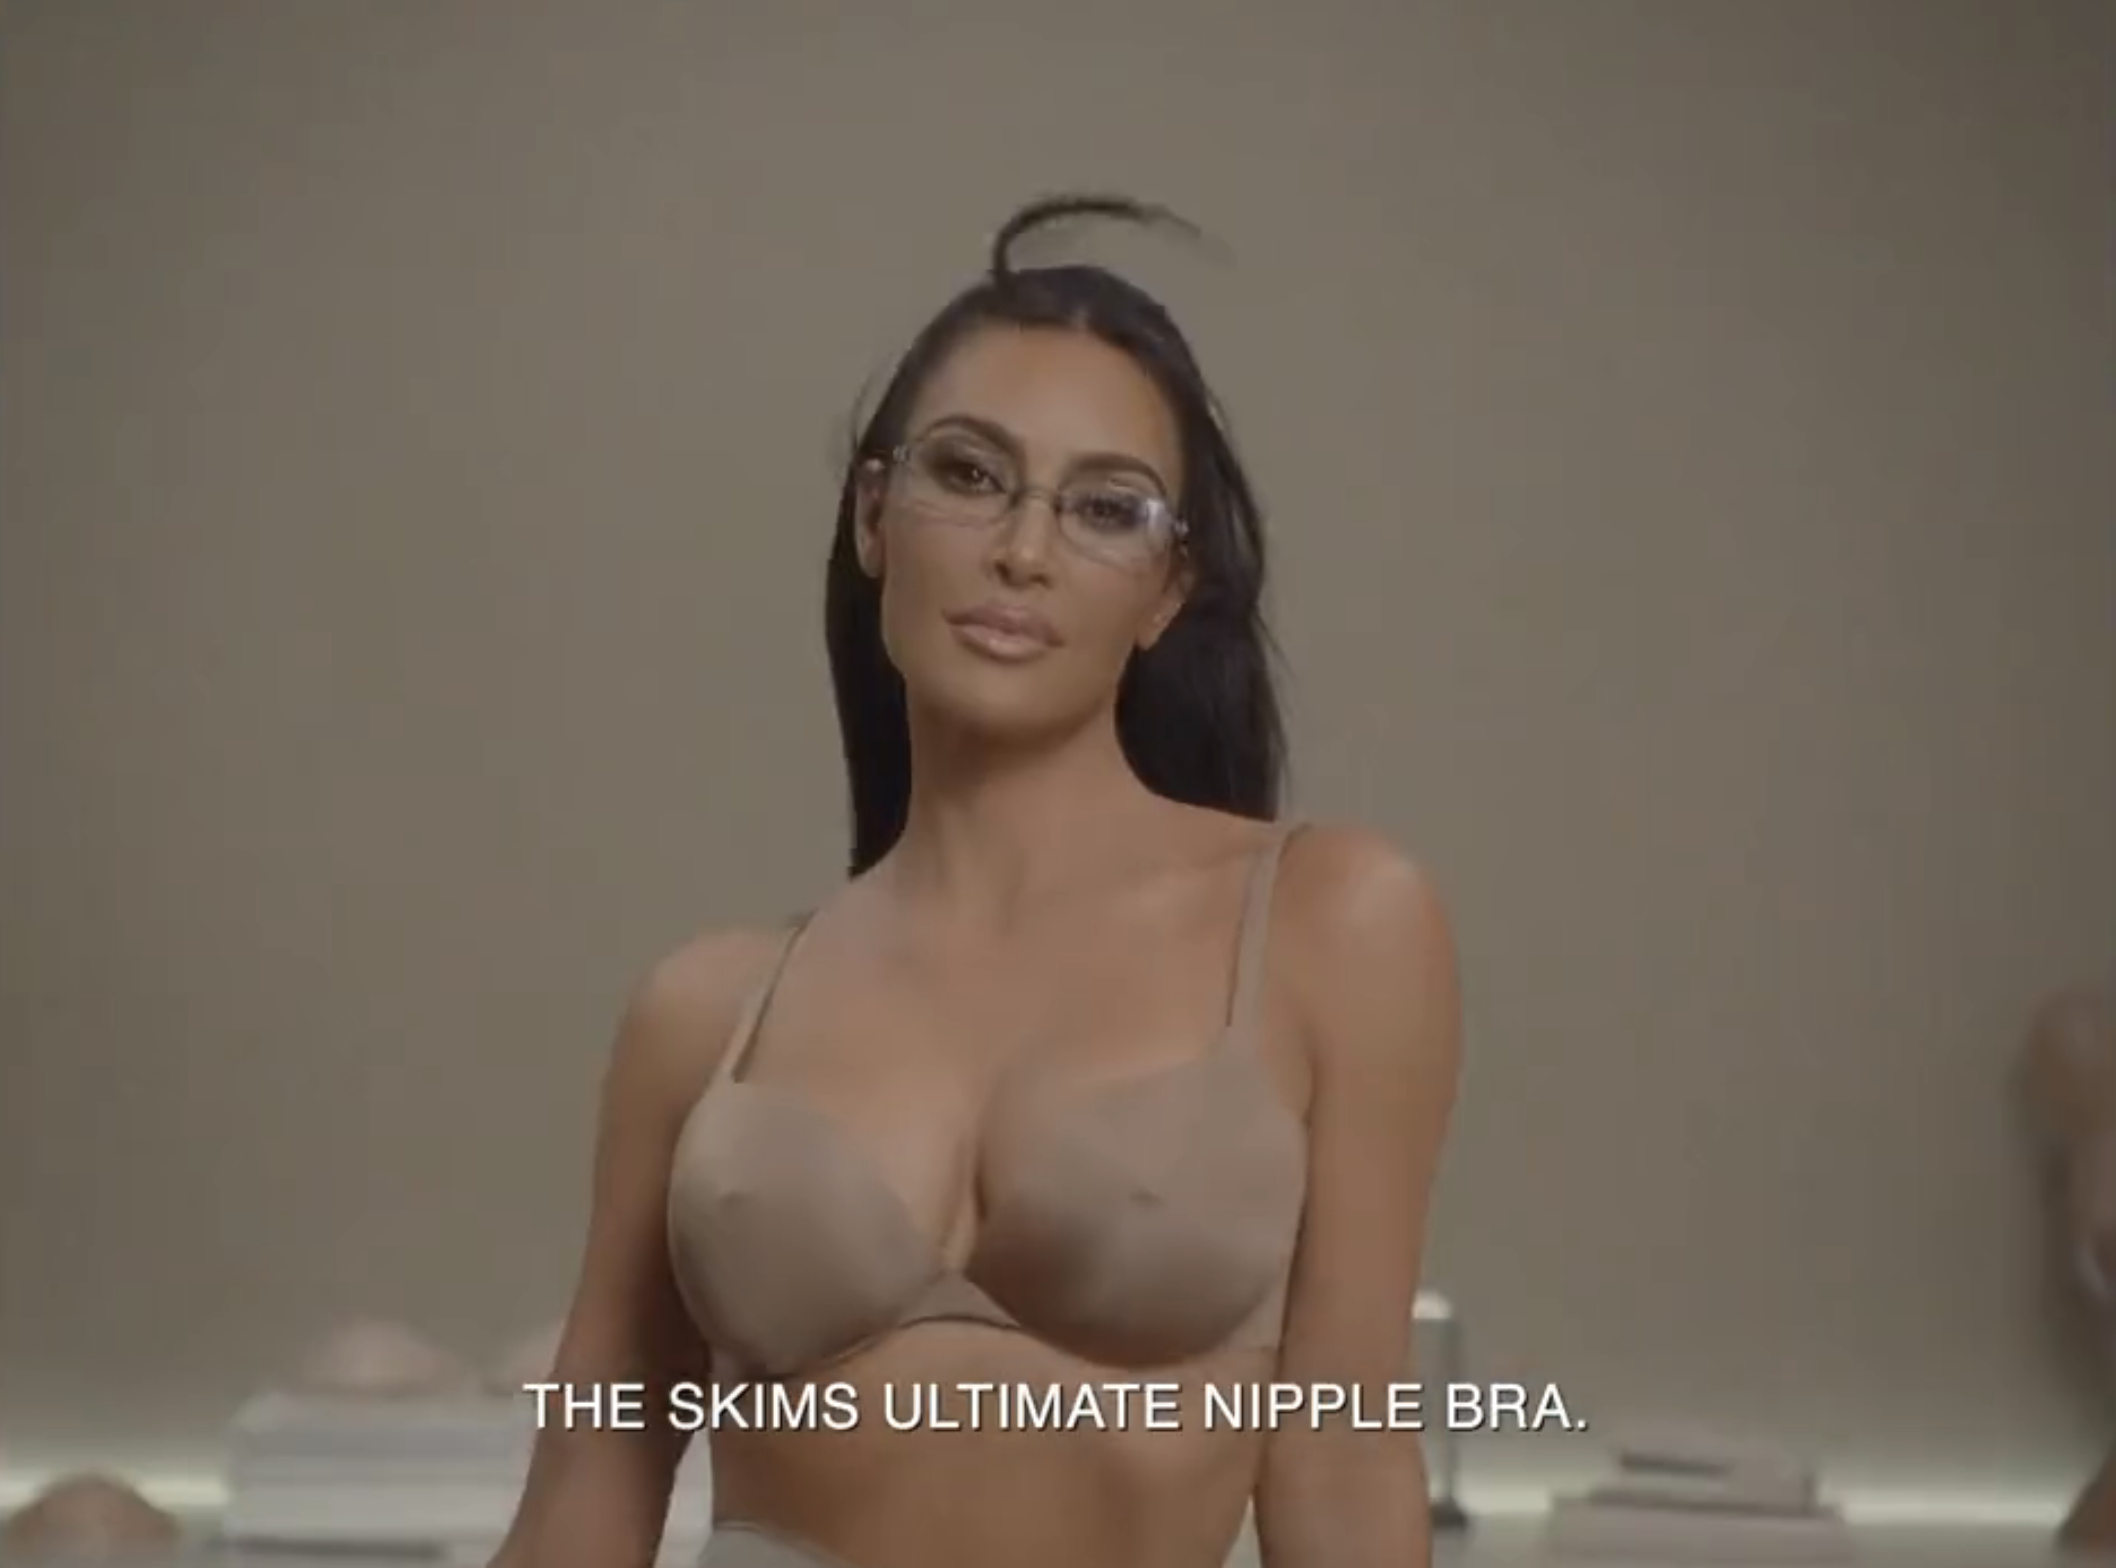 kim in a bra for the video